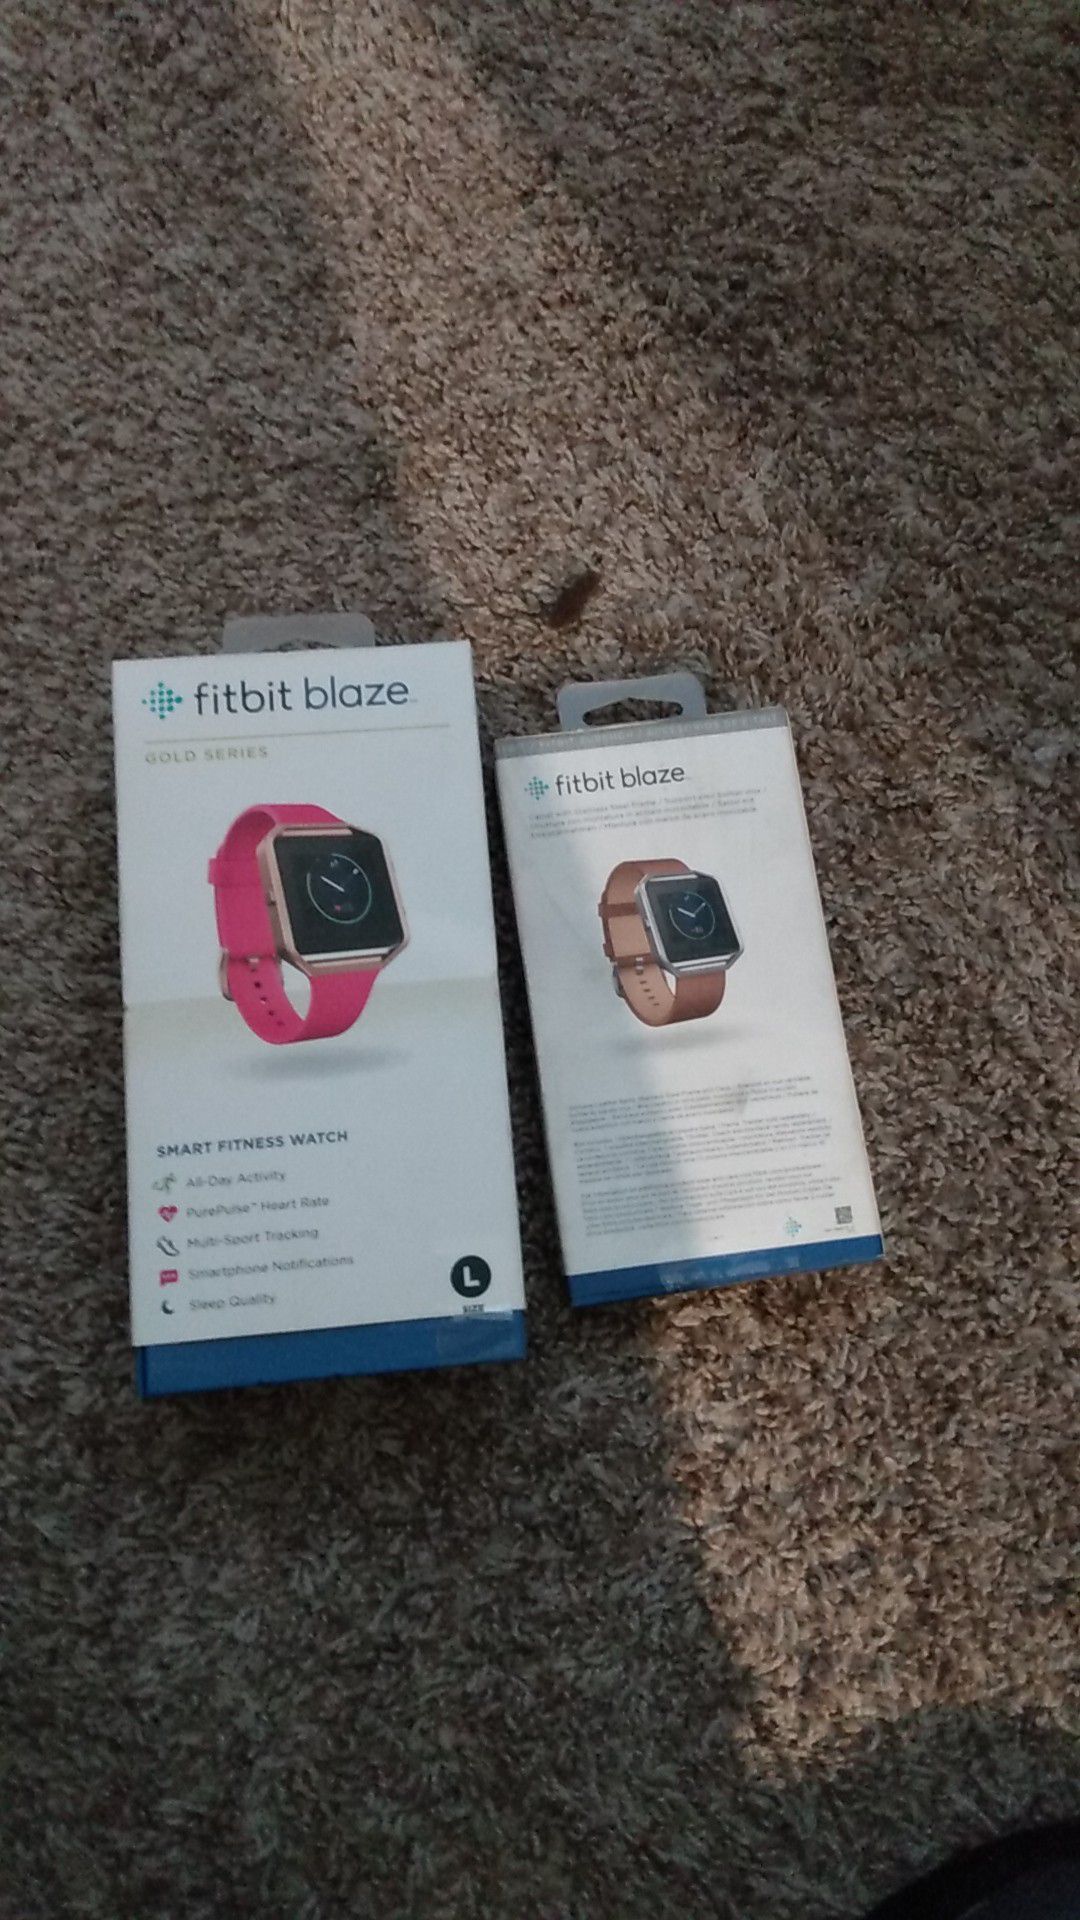 Fitbit blaze smart watch gold series plus accessory